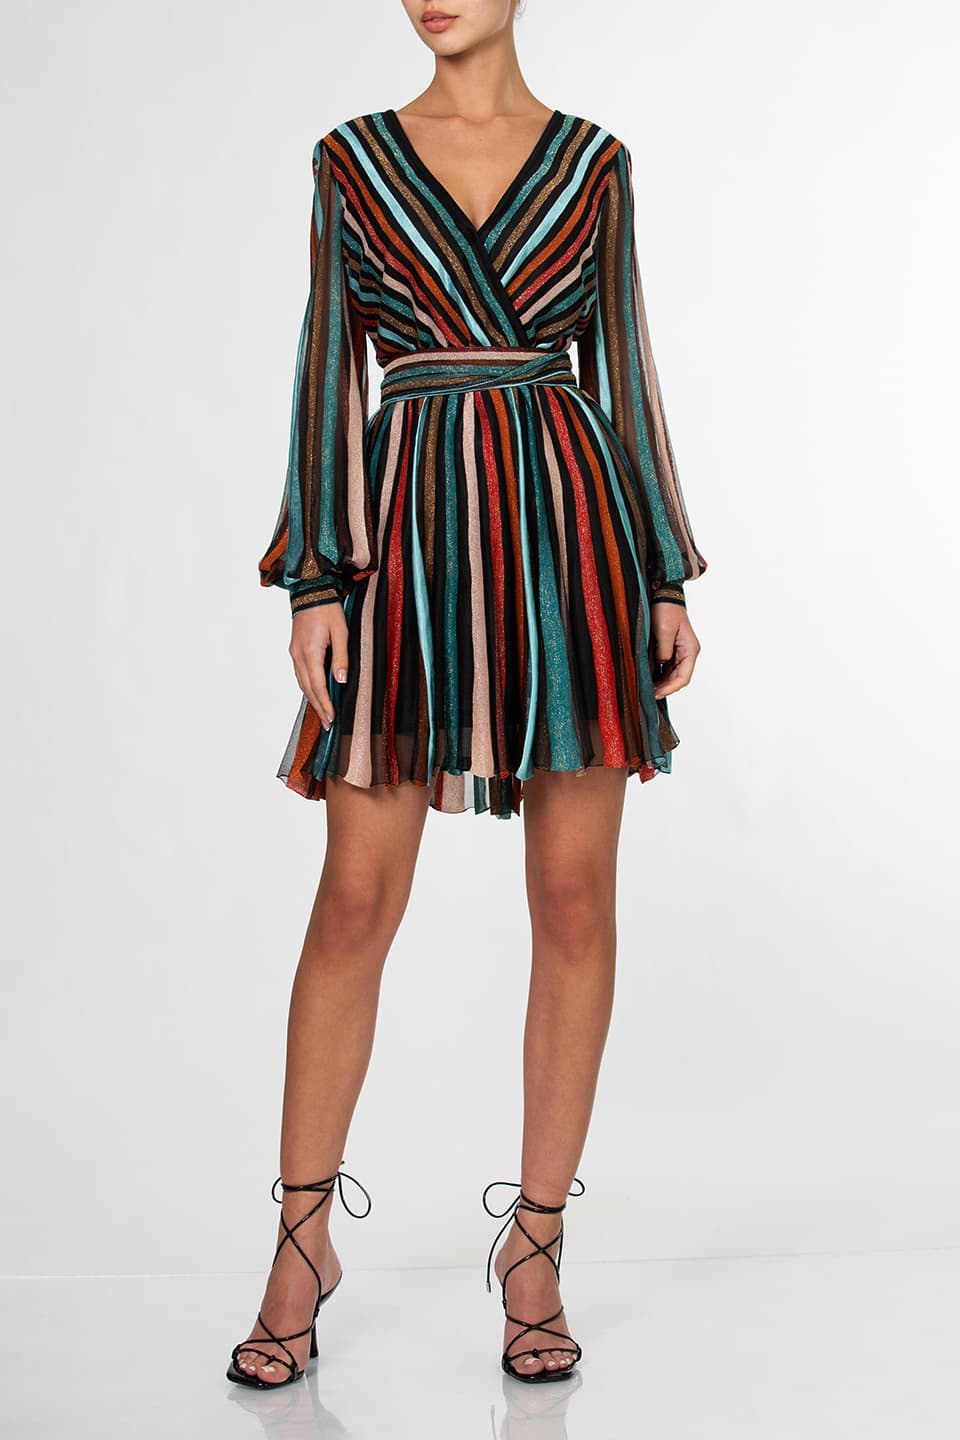 Thumbnail for Product gallery 1, Trendy short dress from fashion designer Kukhareva London